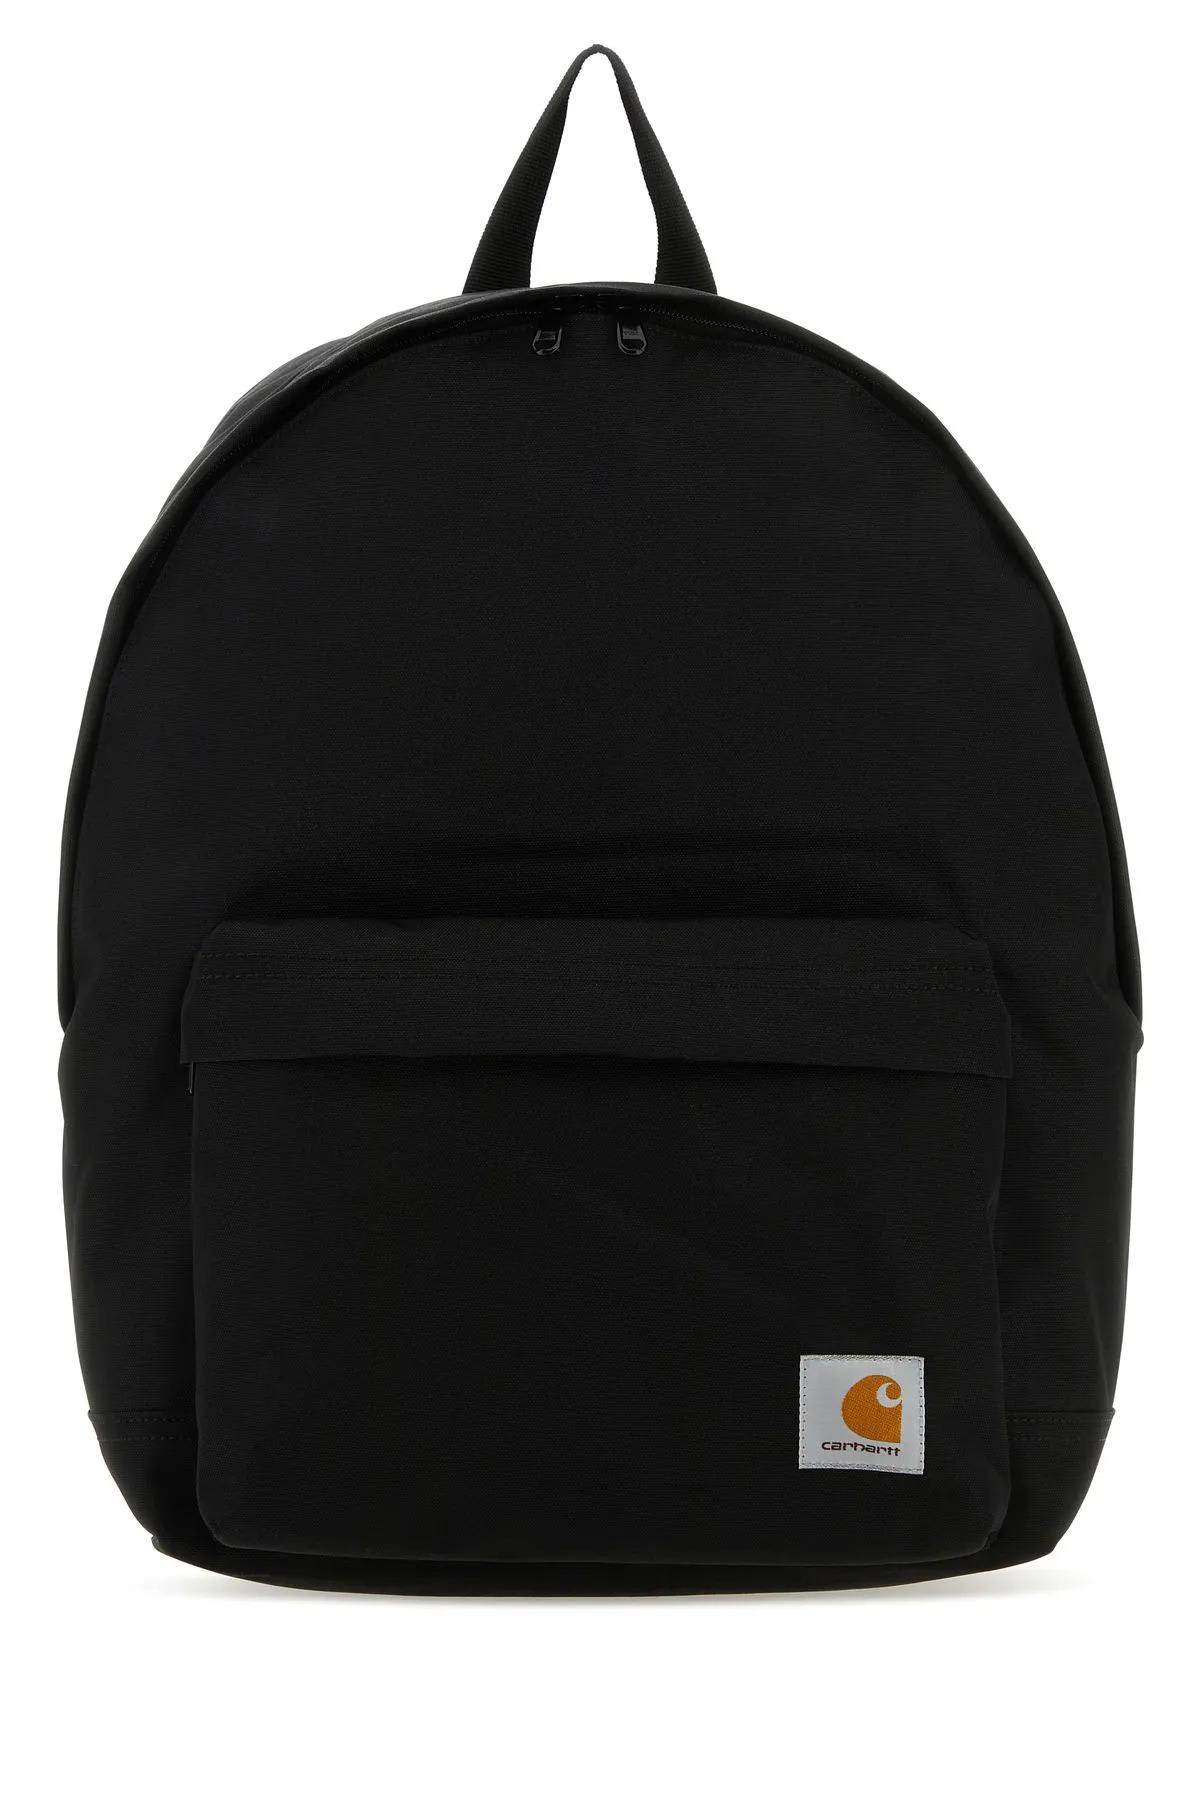 Carhartt Black Fabric Jake Backpack